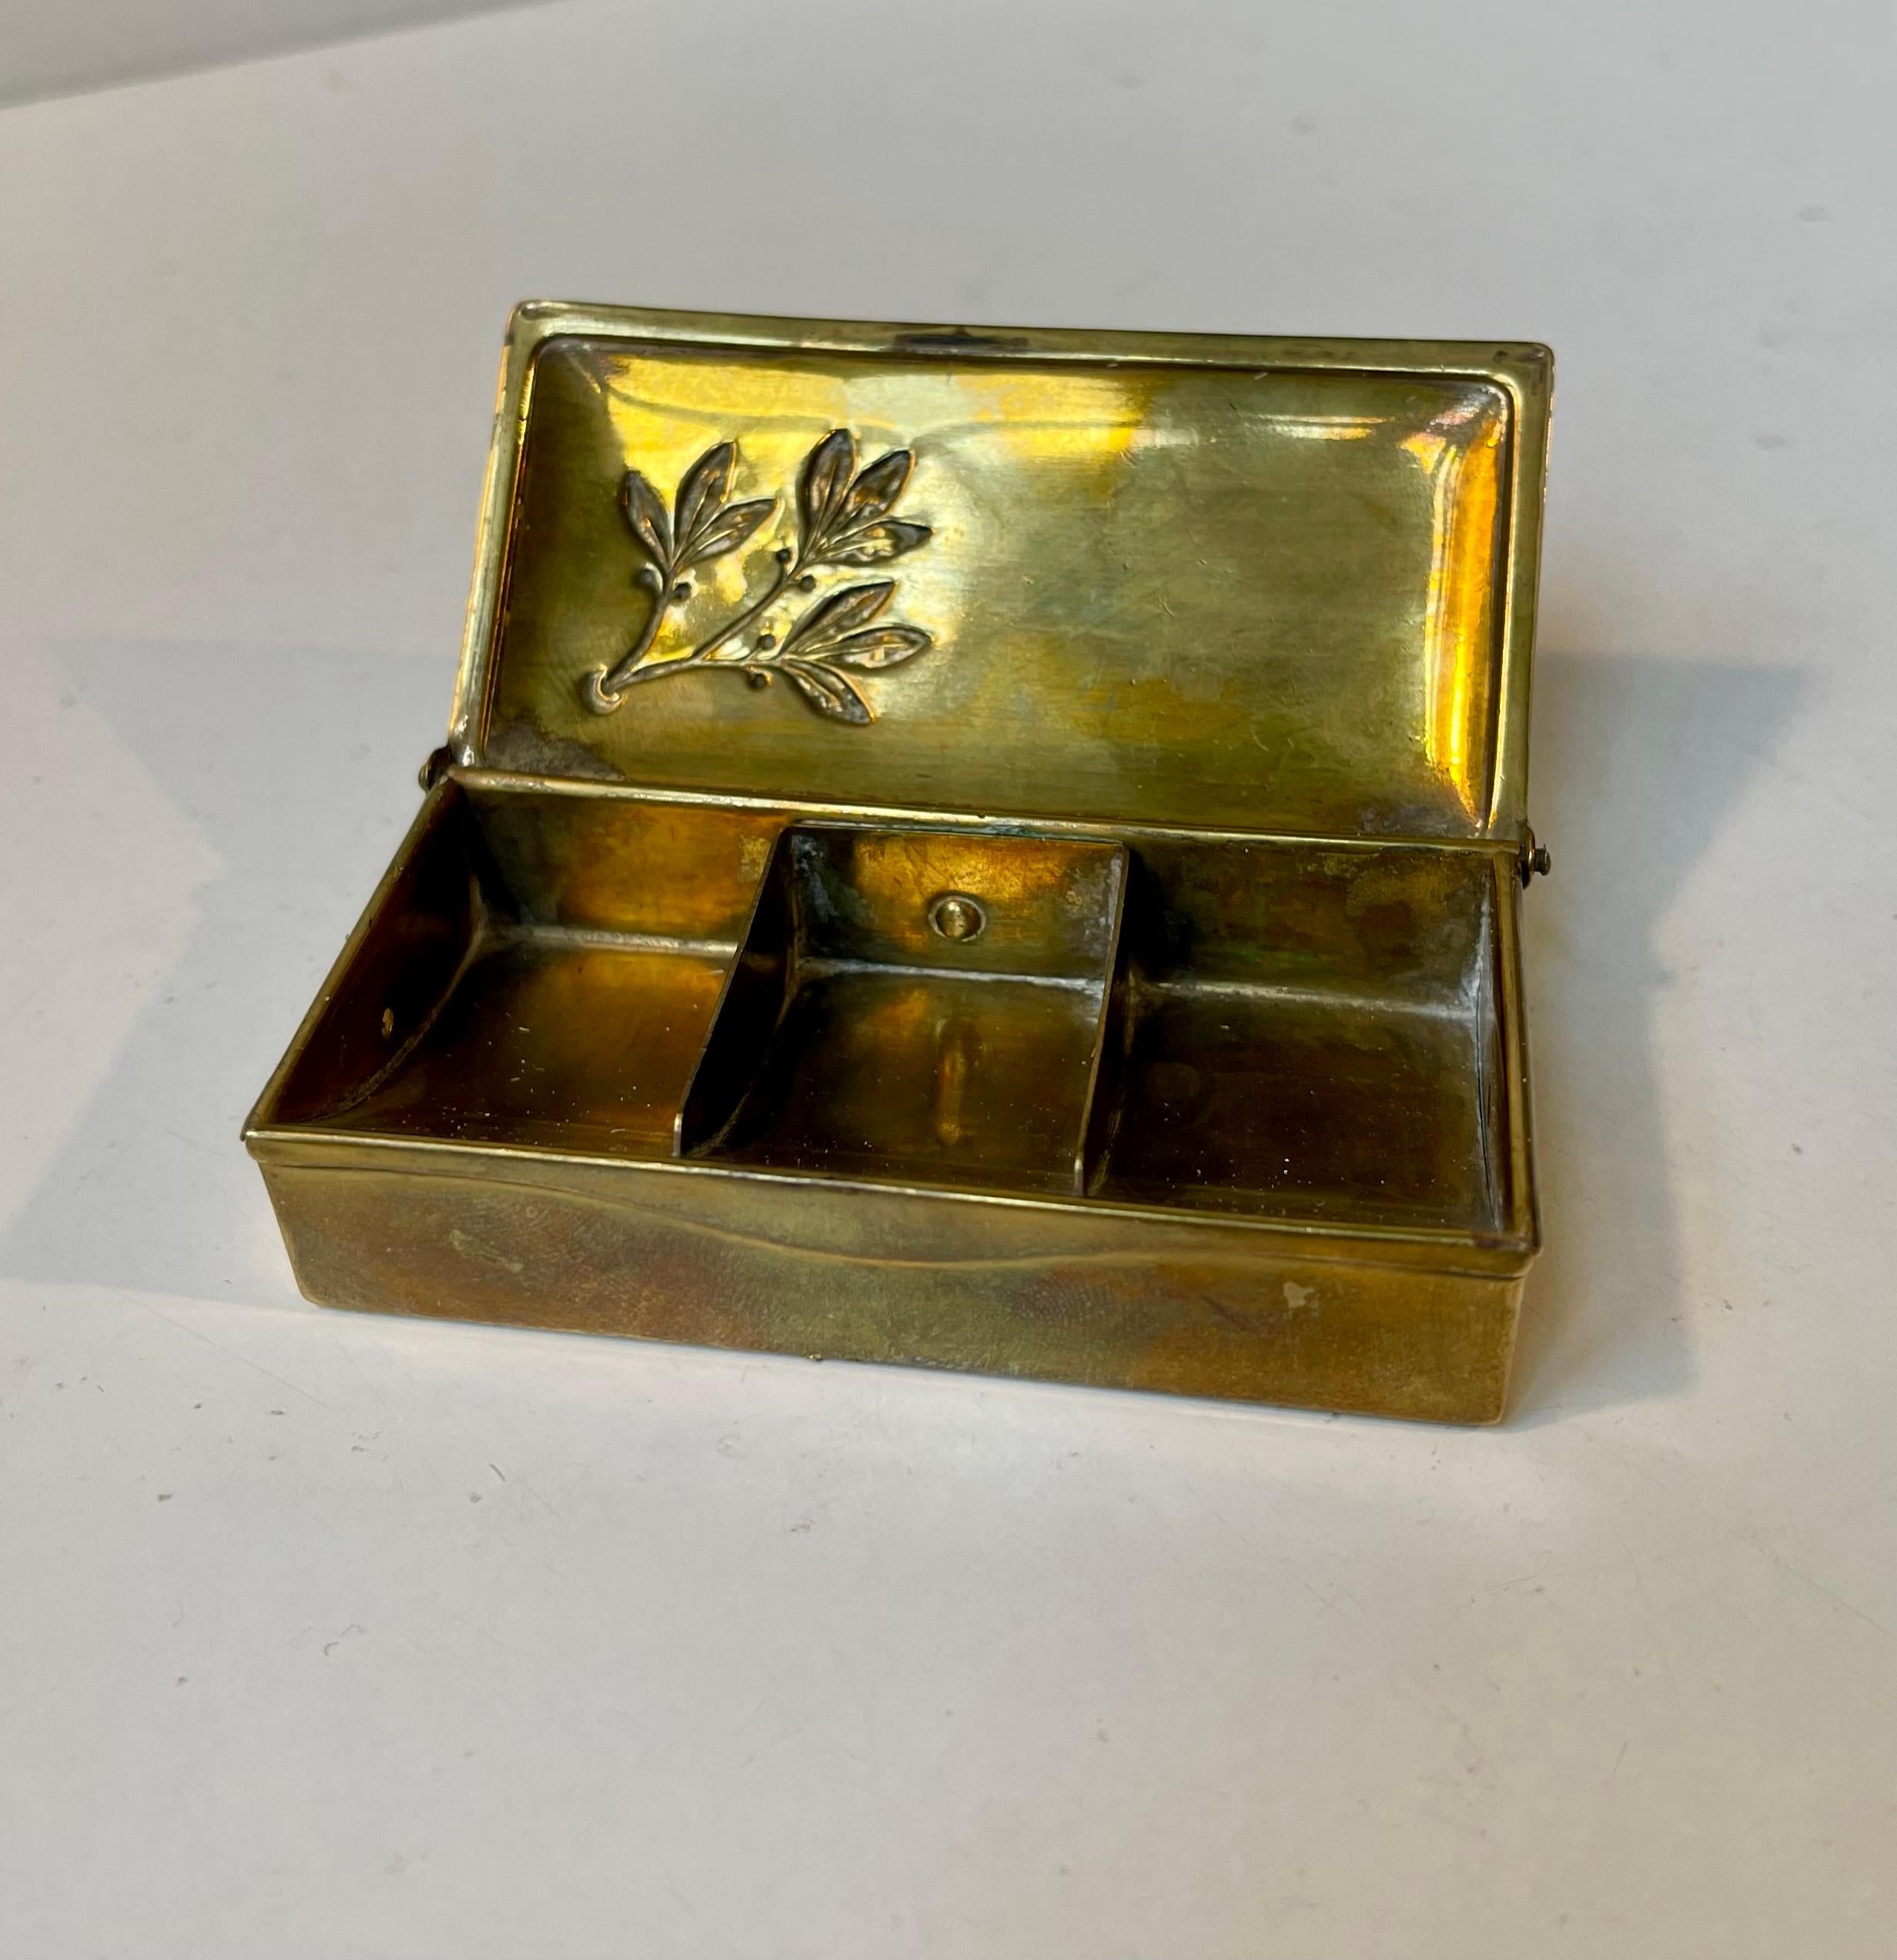 20th Century Art Deco 3 Compartment Pill Box in Brass, 1930s For Sale